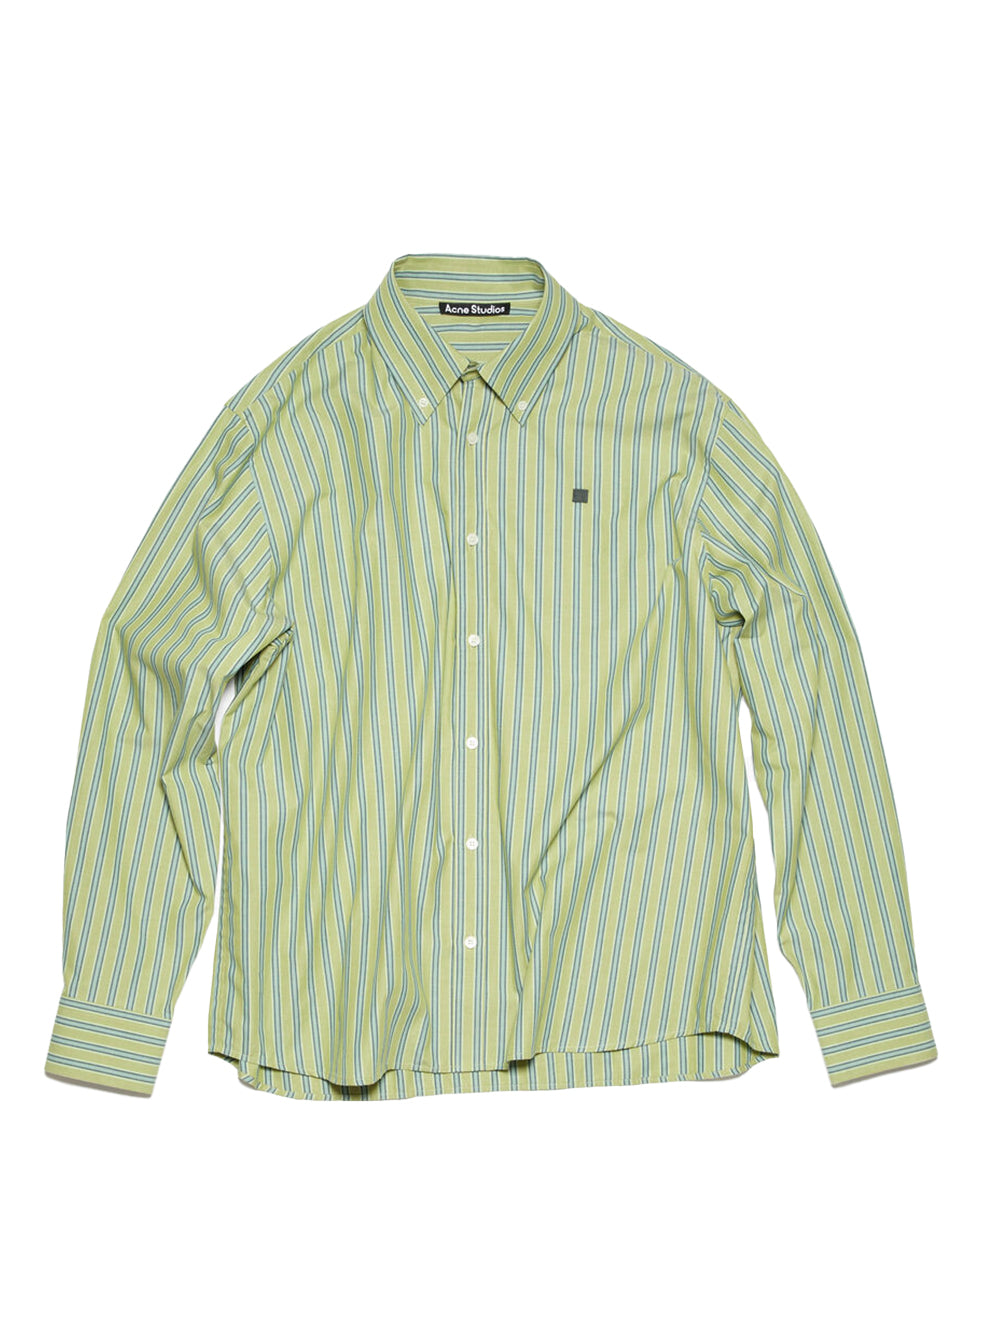 Stripe Button Up Shirt (Bright Green/Dark Green)